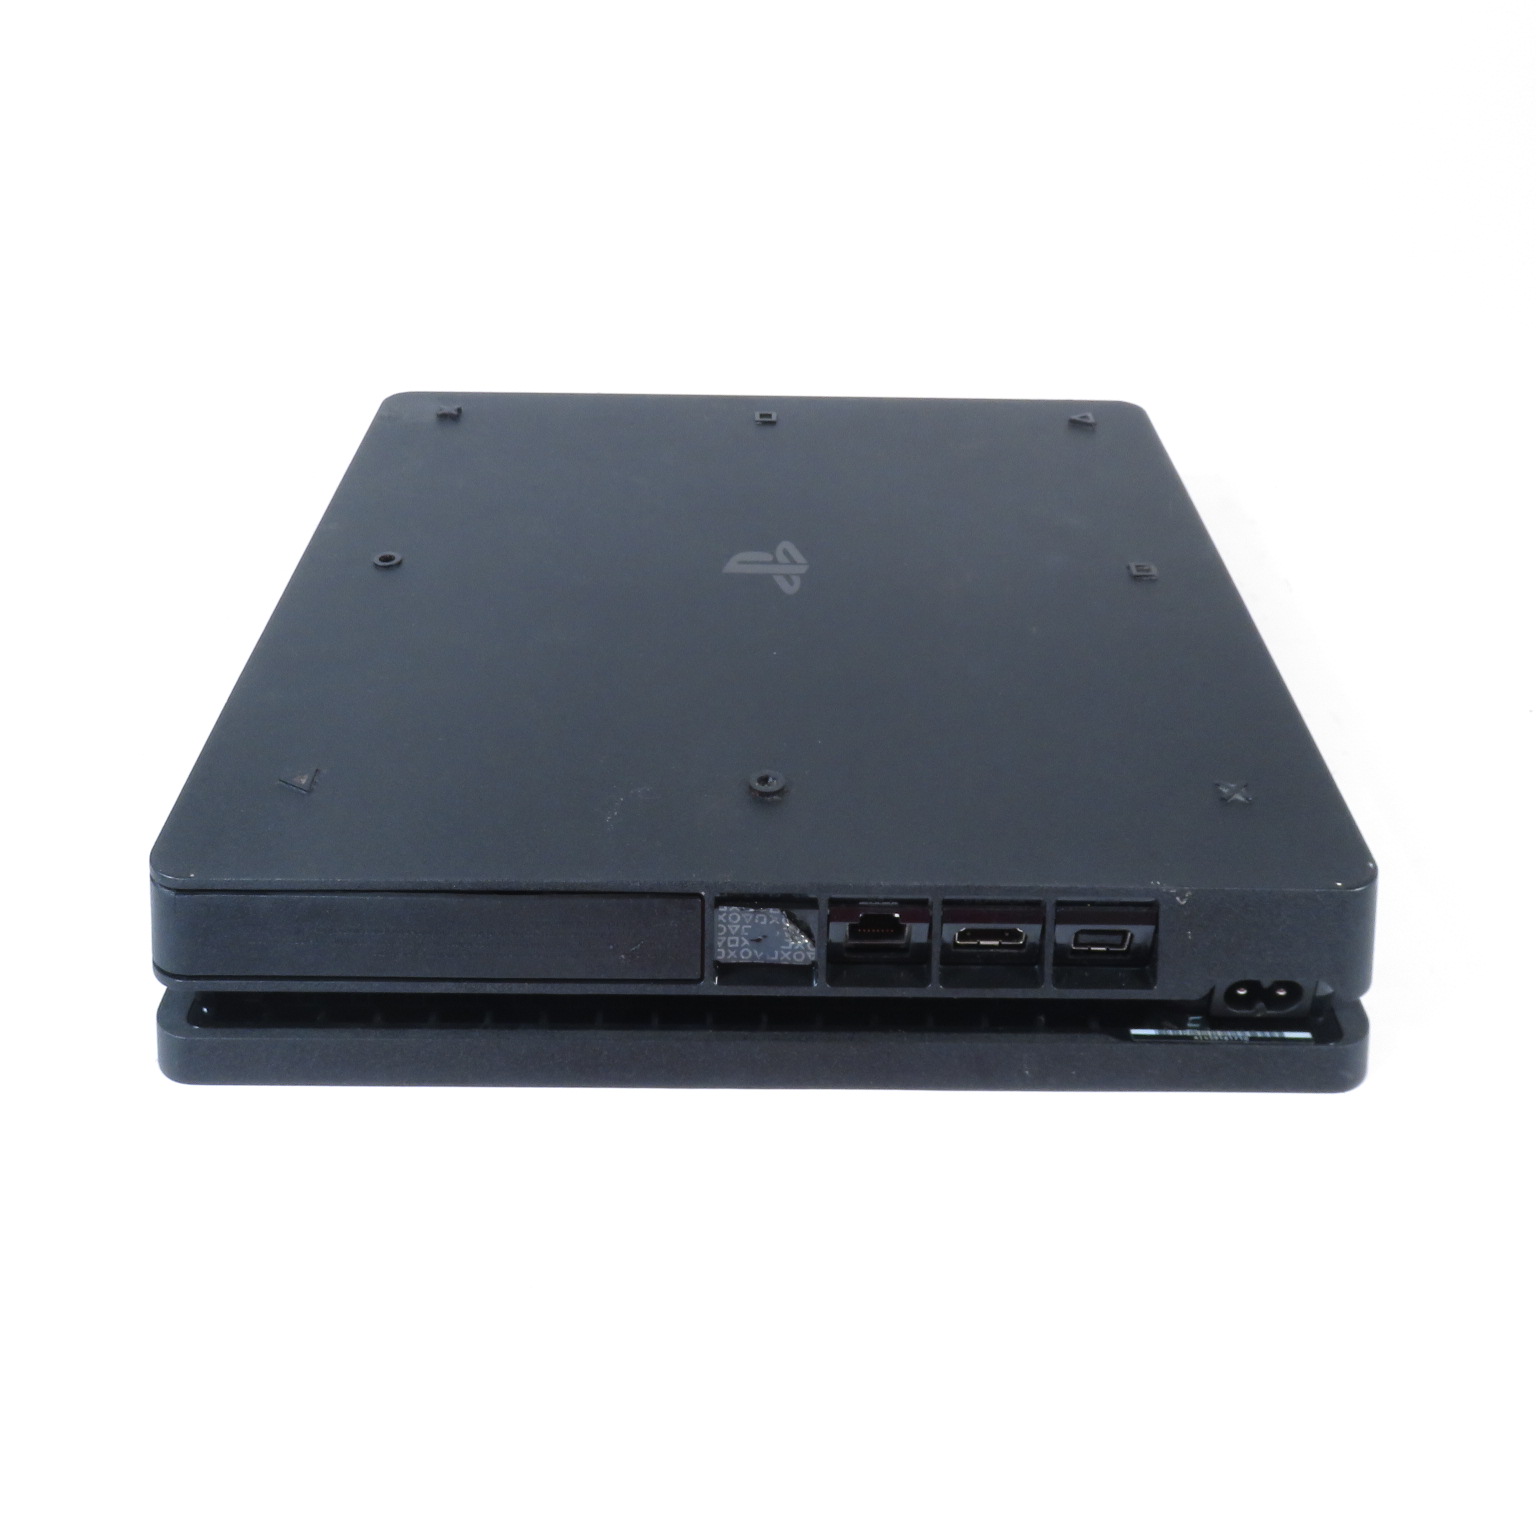 Sony PlayStation 4 Slim CUH-2215B 1TB HDD Black Home Video Game 